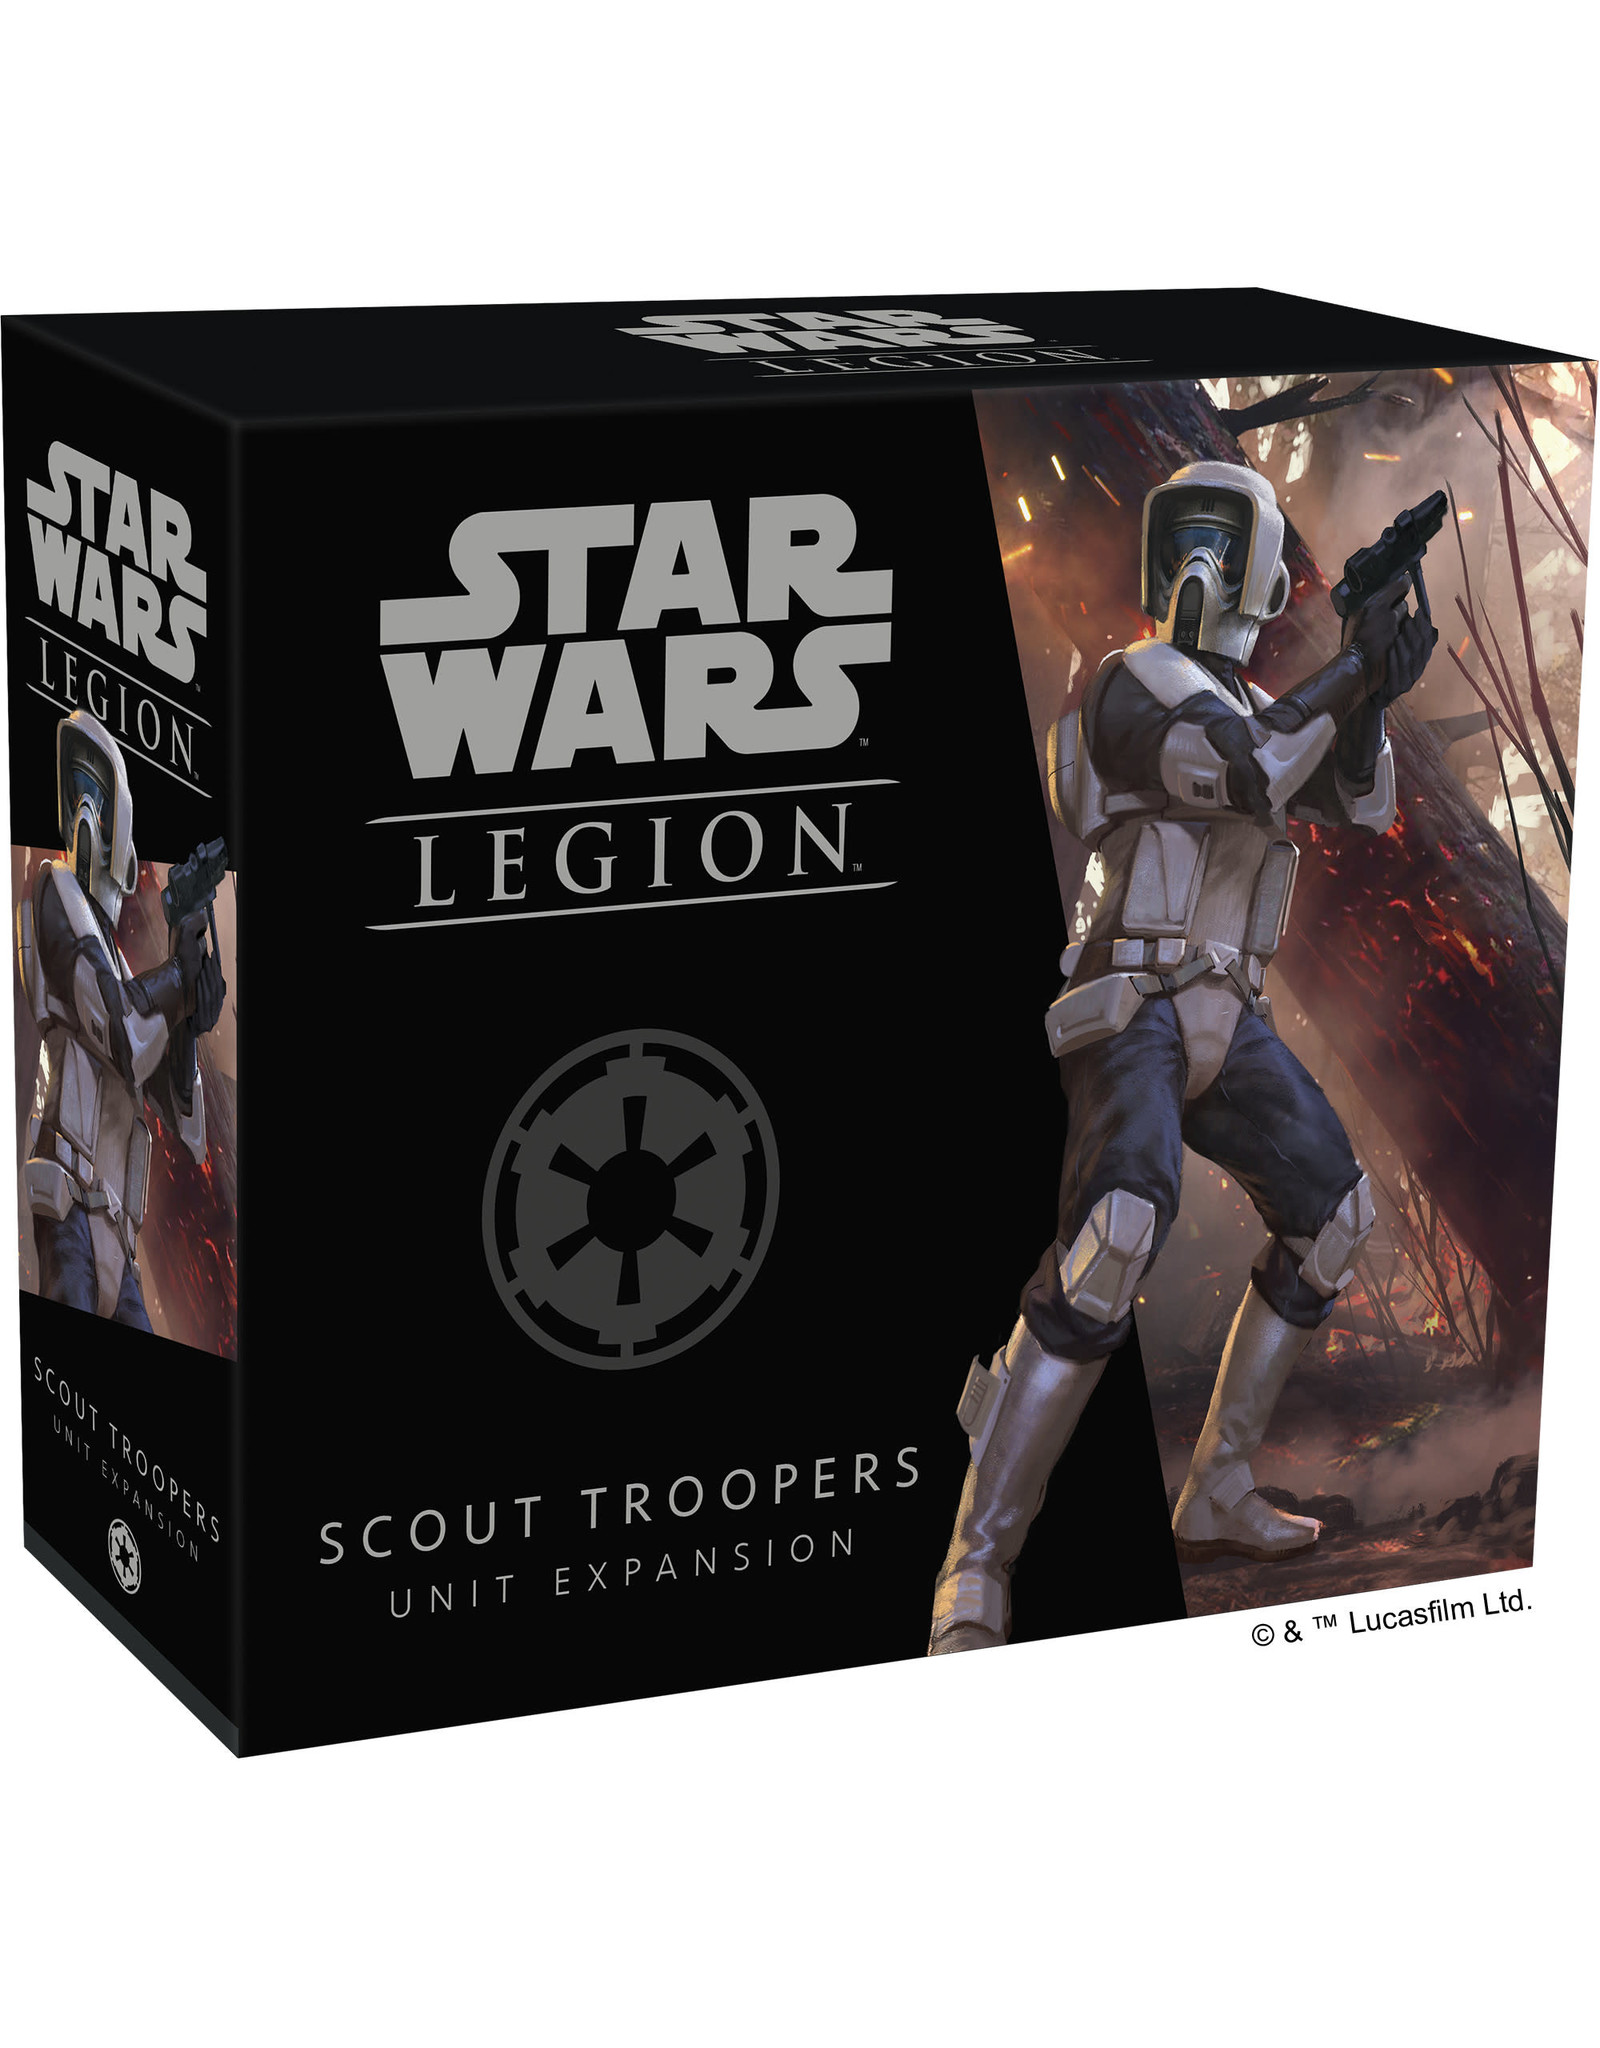 STAR WARS LEGION Star Wars Legion Scout Troopers Unit Expansion